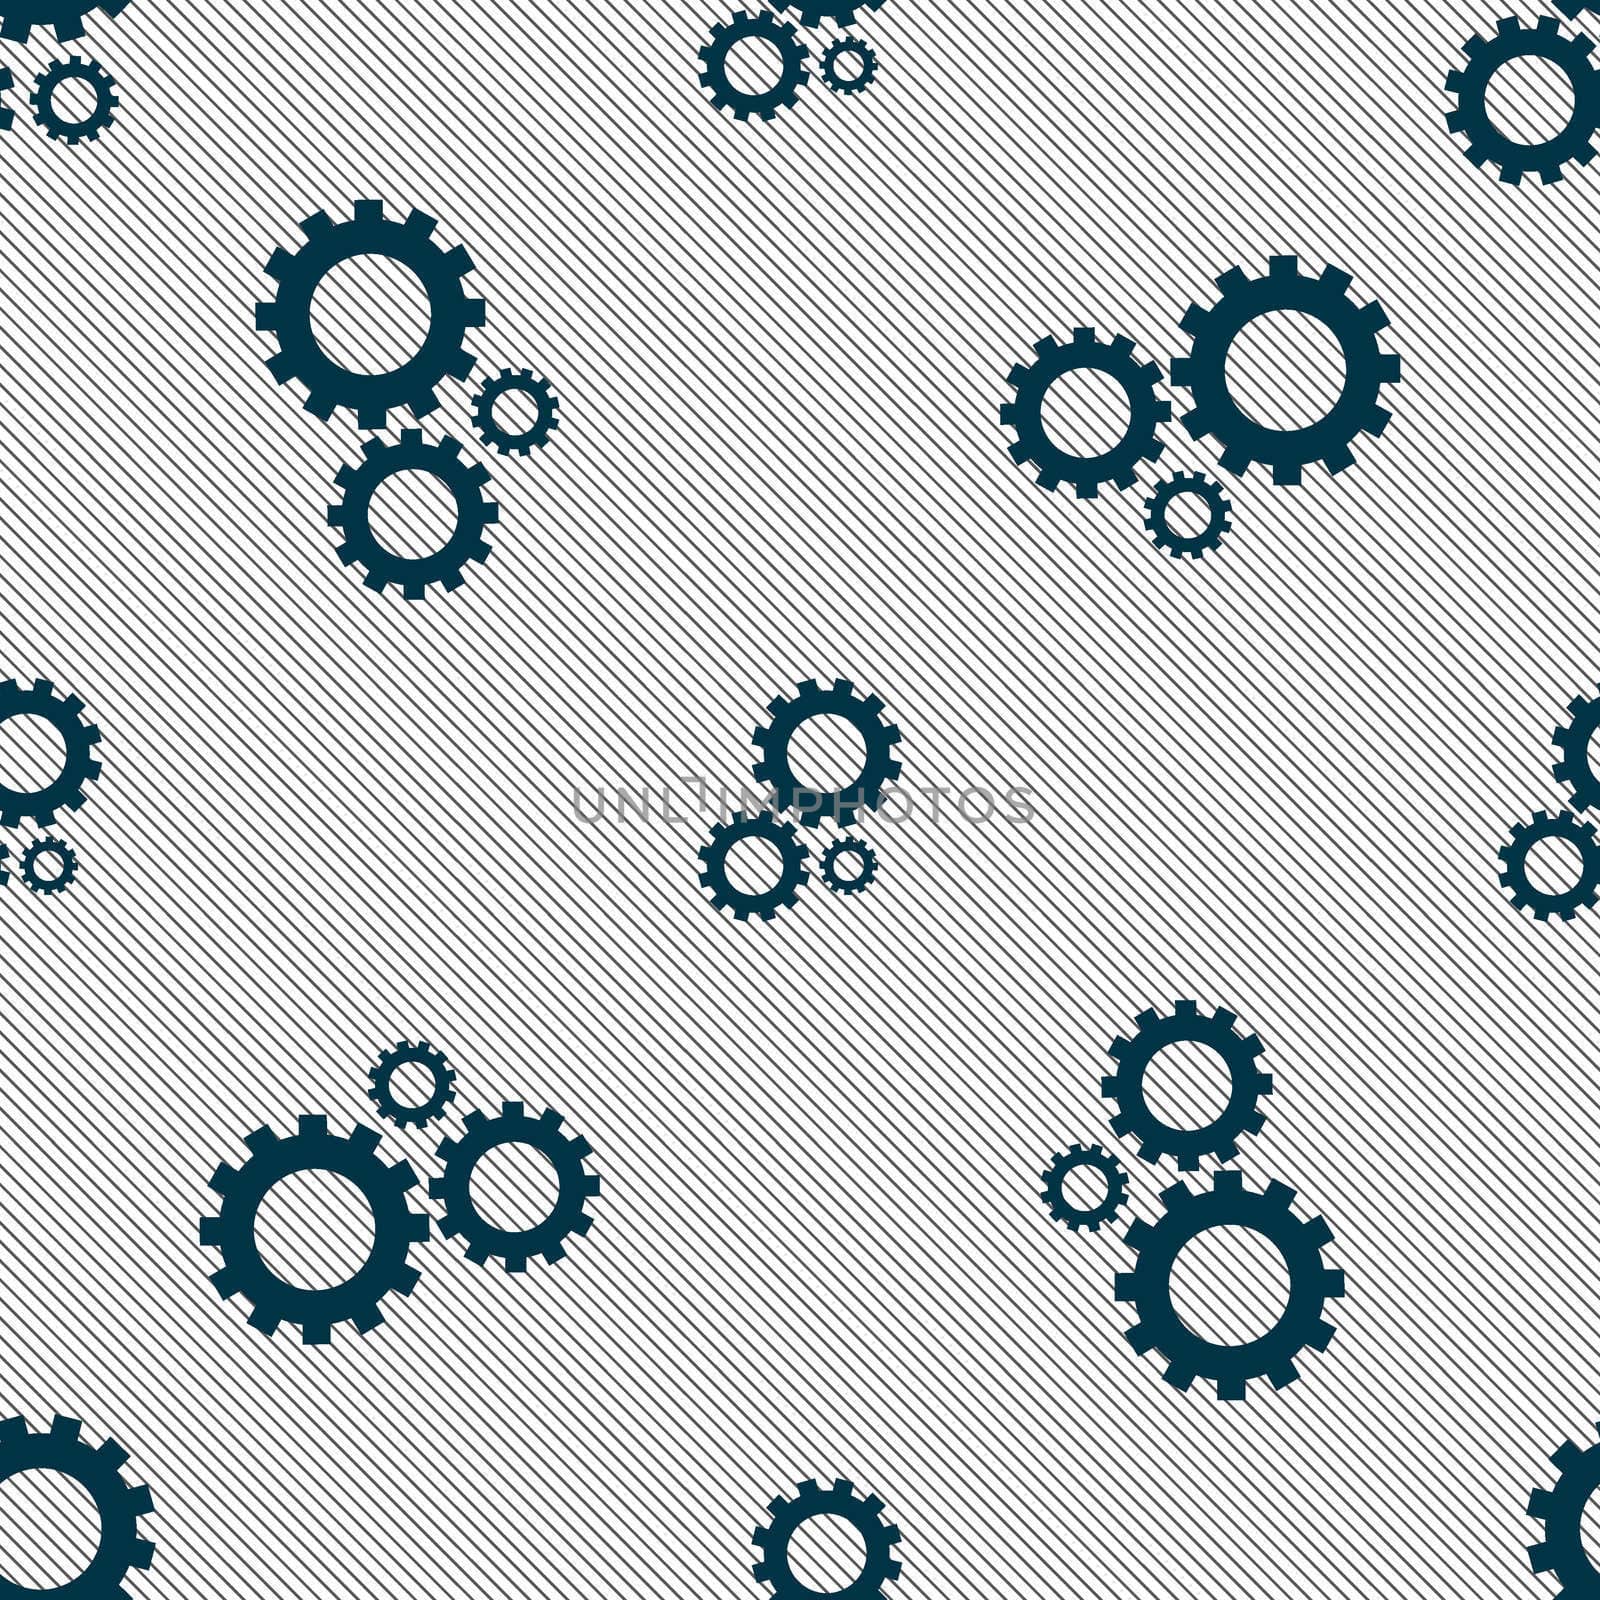 Cog settings sign icon. Cogwheel gear mechanism symbol. Seamless pattern with geometric texture. illustration